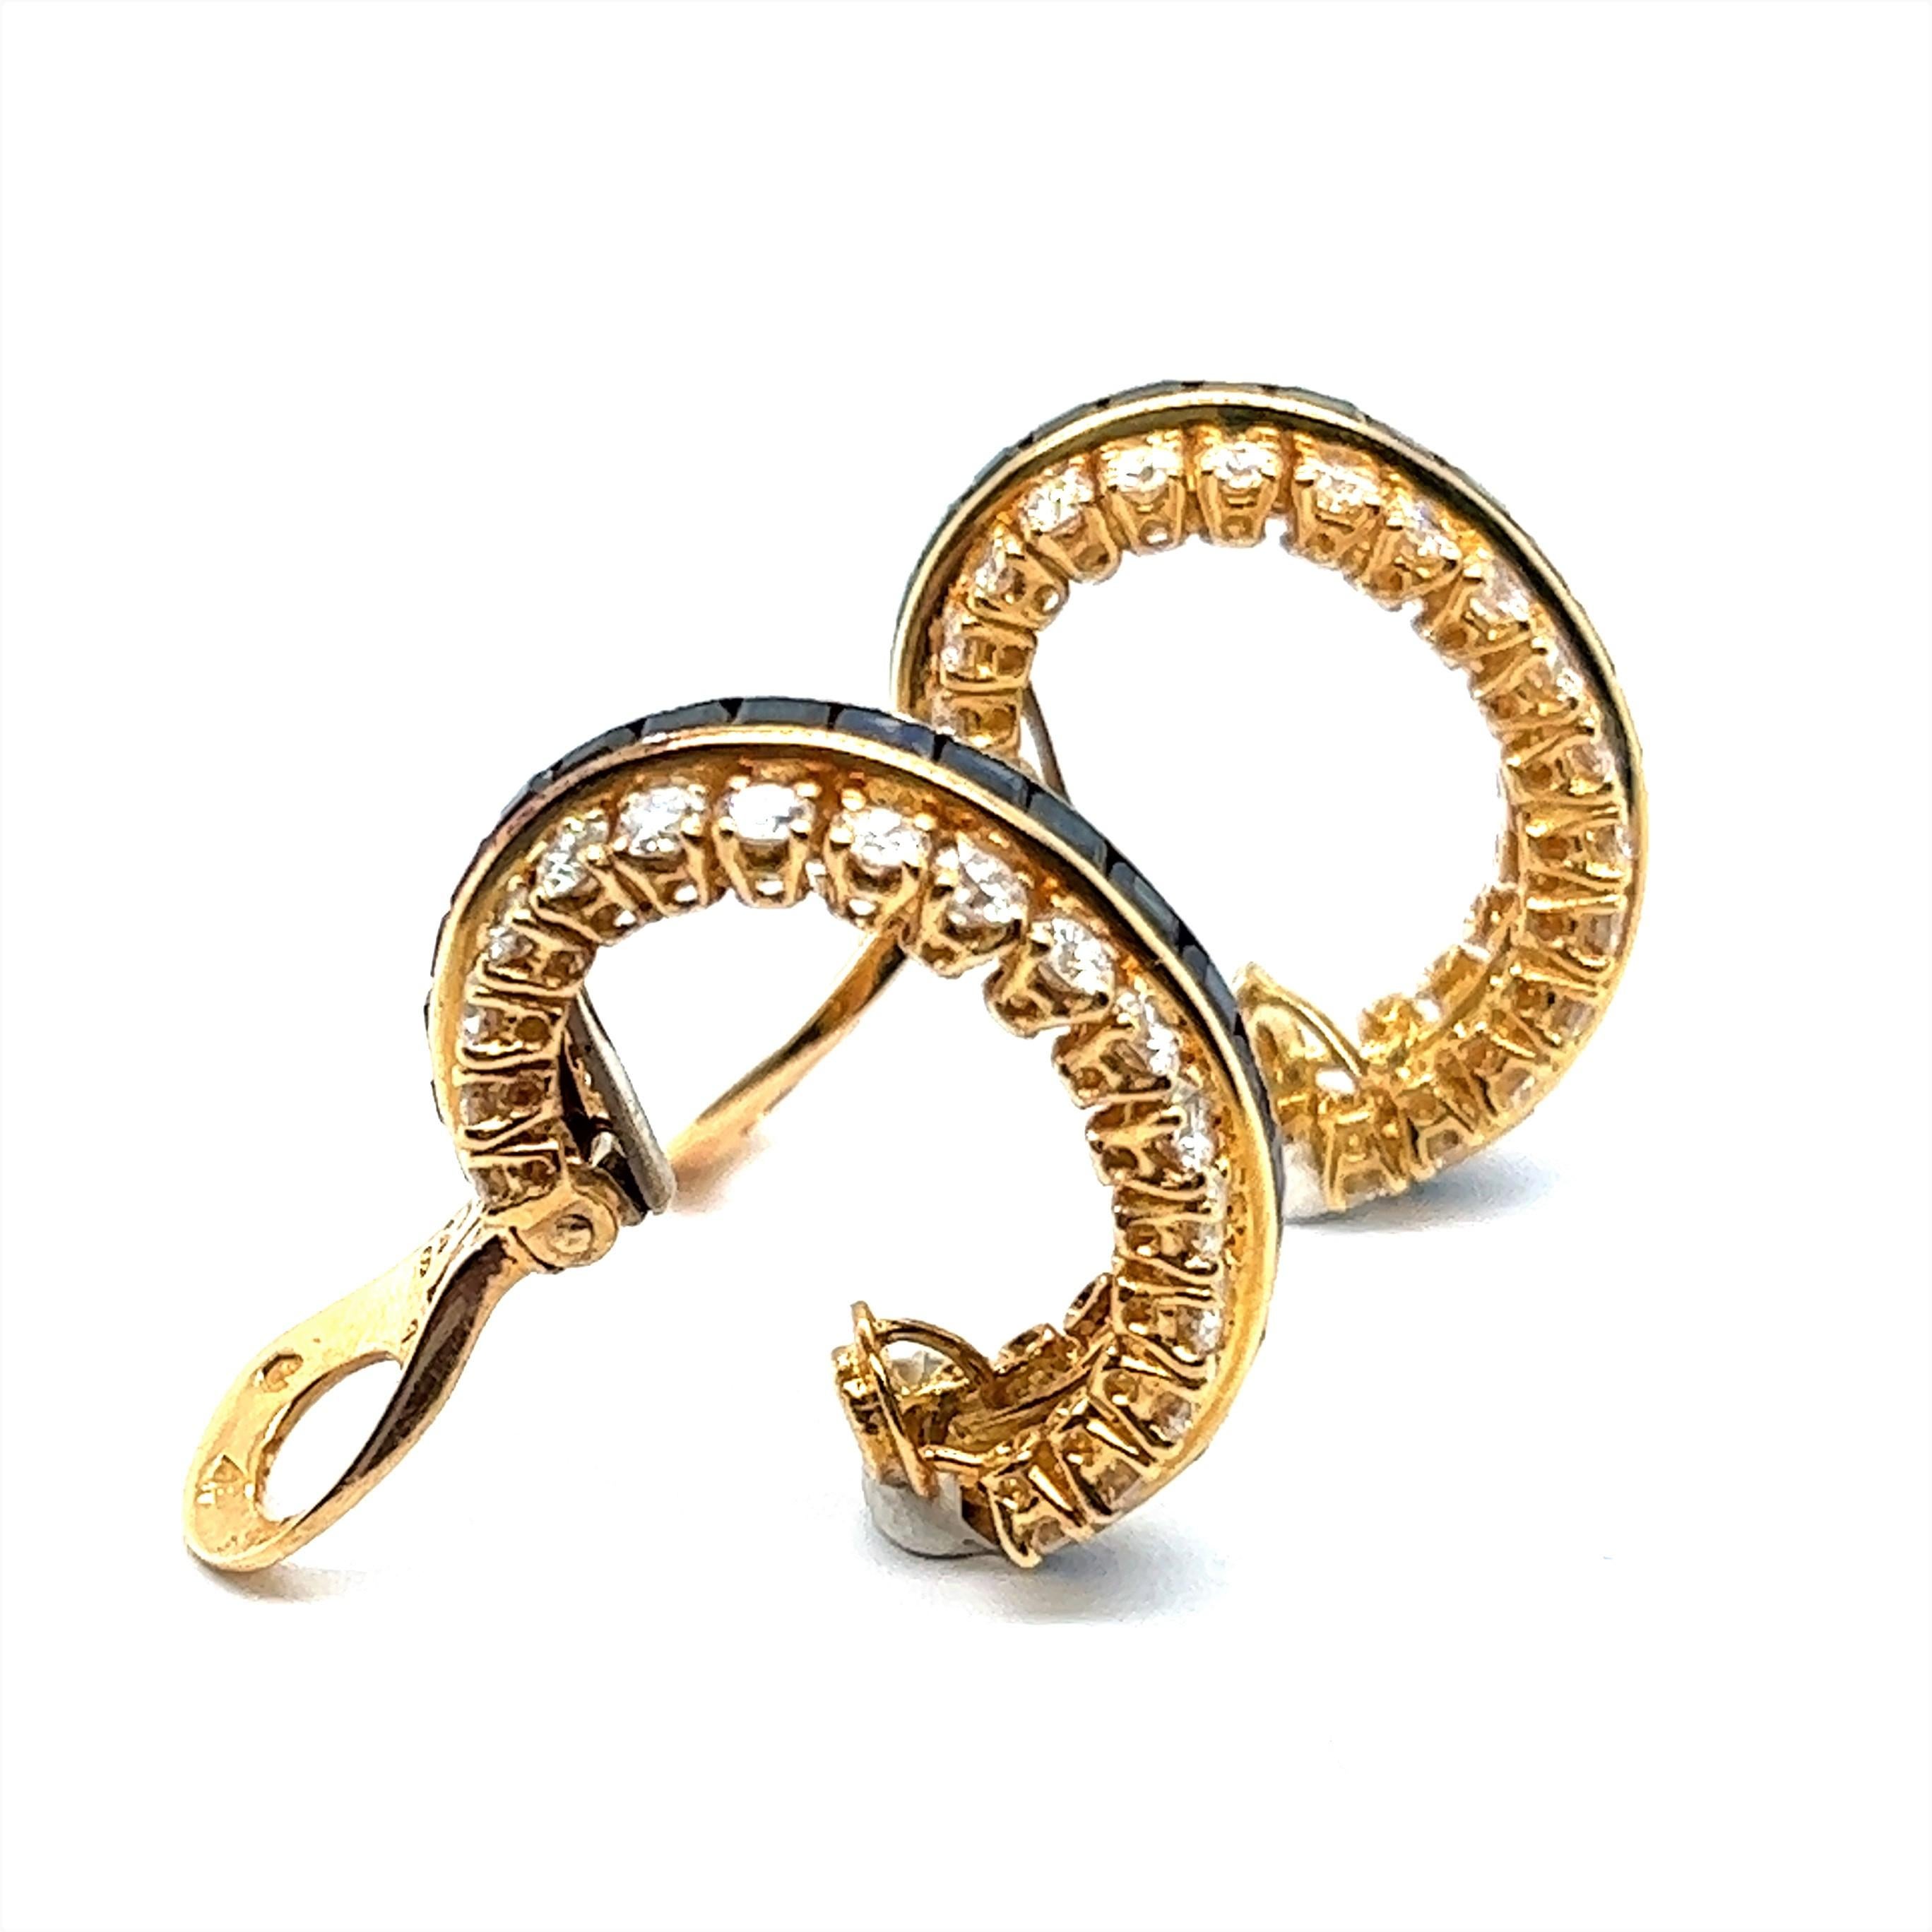 Modern Elegant Van Cleef & Arpels Earclips in 18K Gold with Sapphires and Diamonds